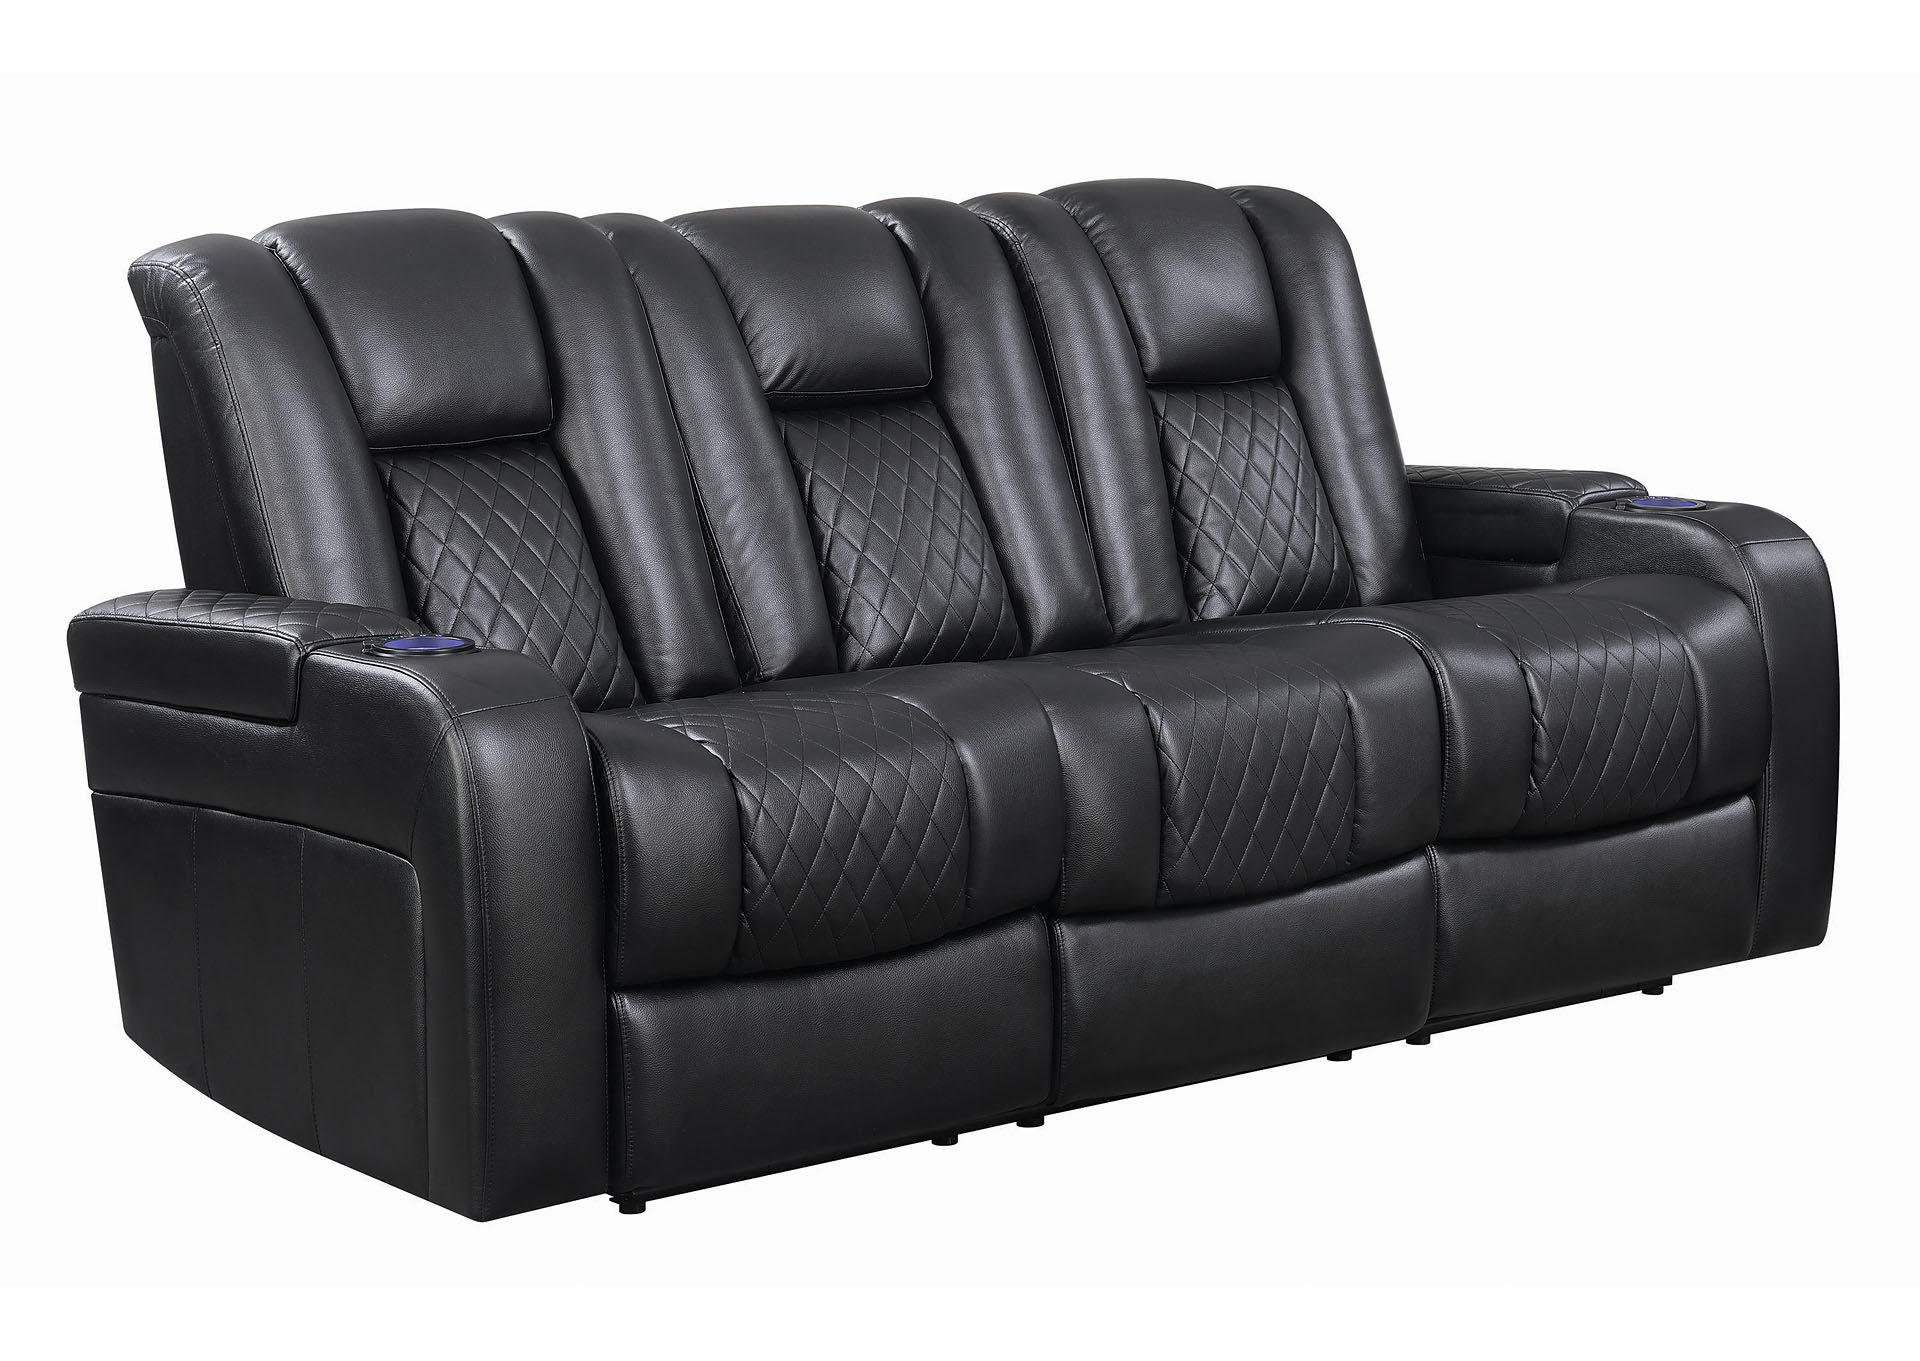 Delangelo Black Power Motion Reclining Sofa,Coaster Furniture